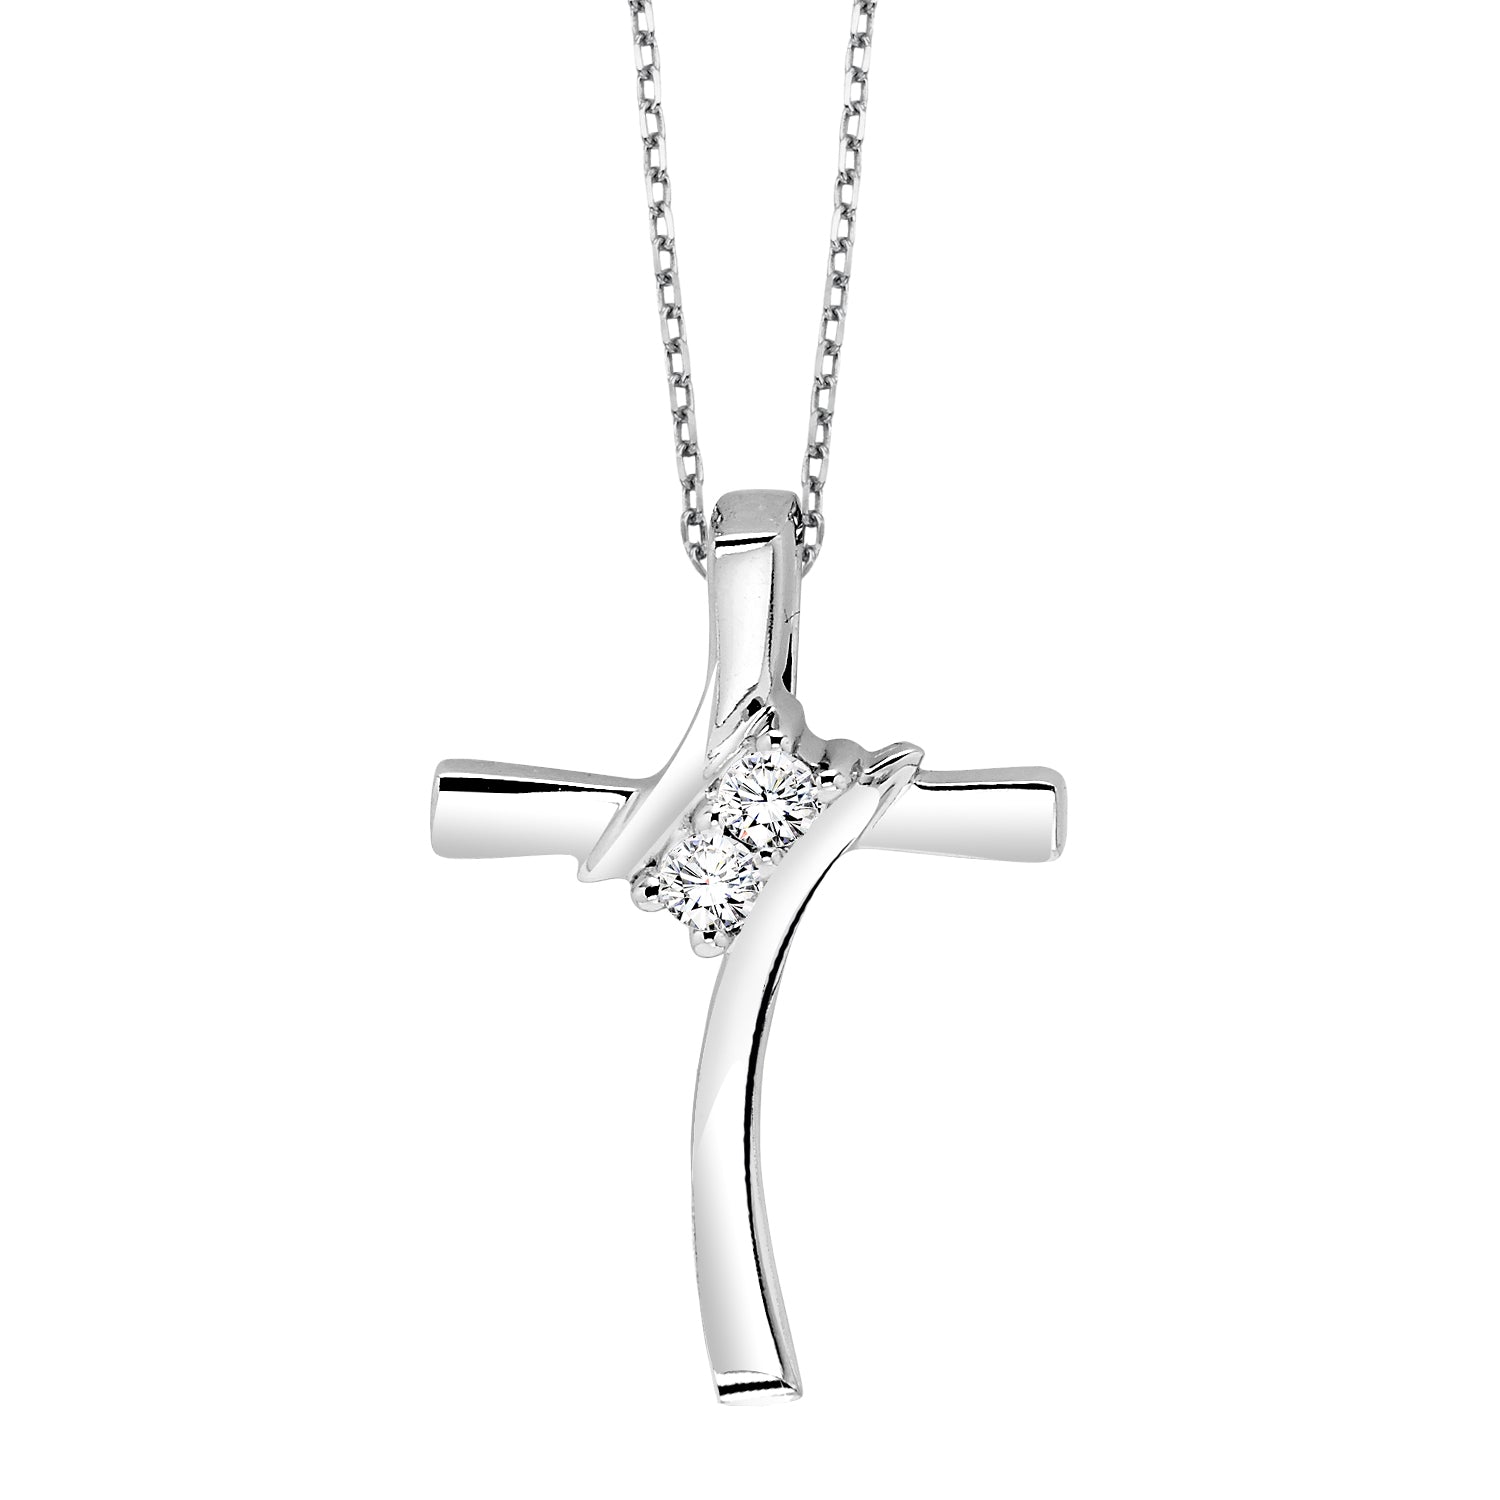 diamond 2-stone cross pendant necklace in sterling silver